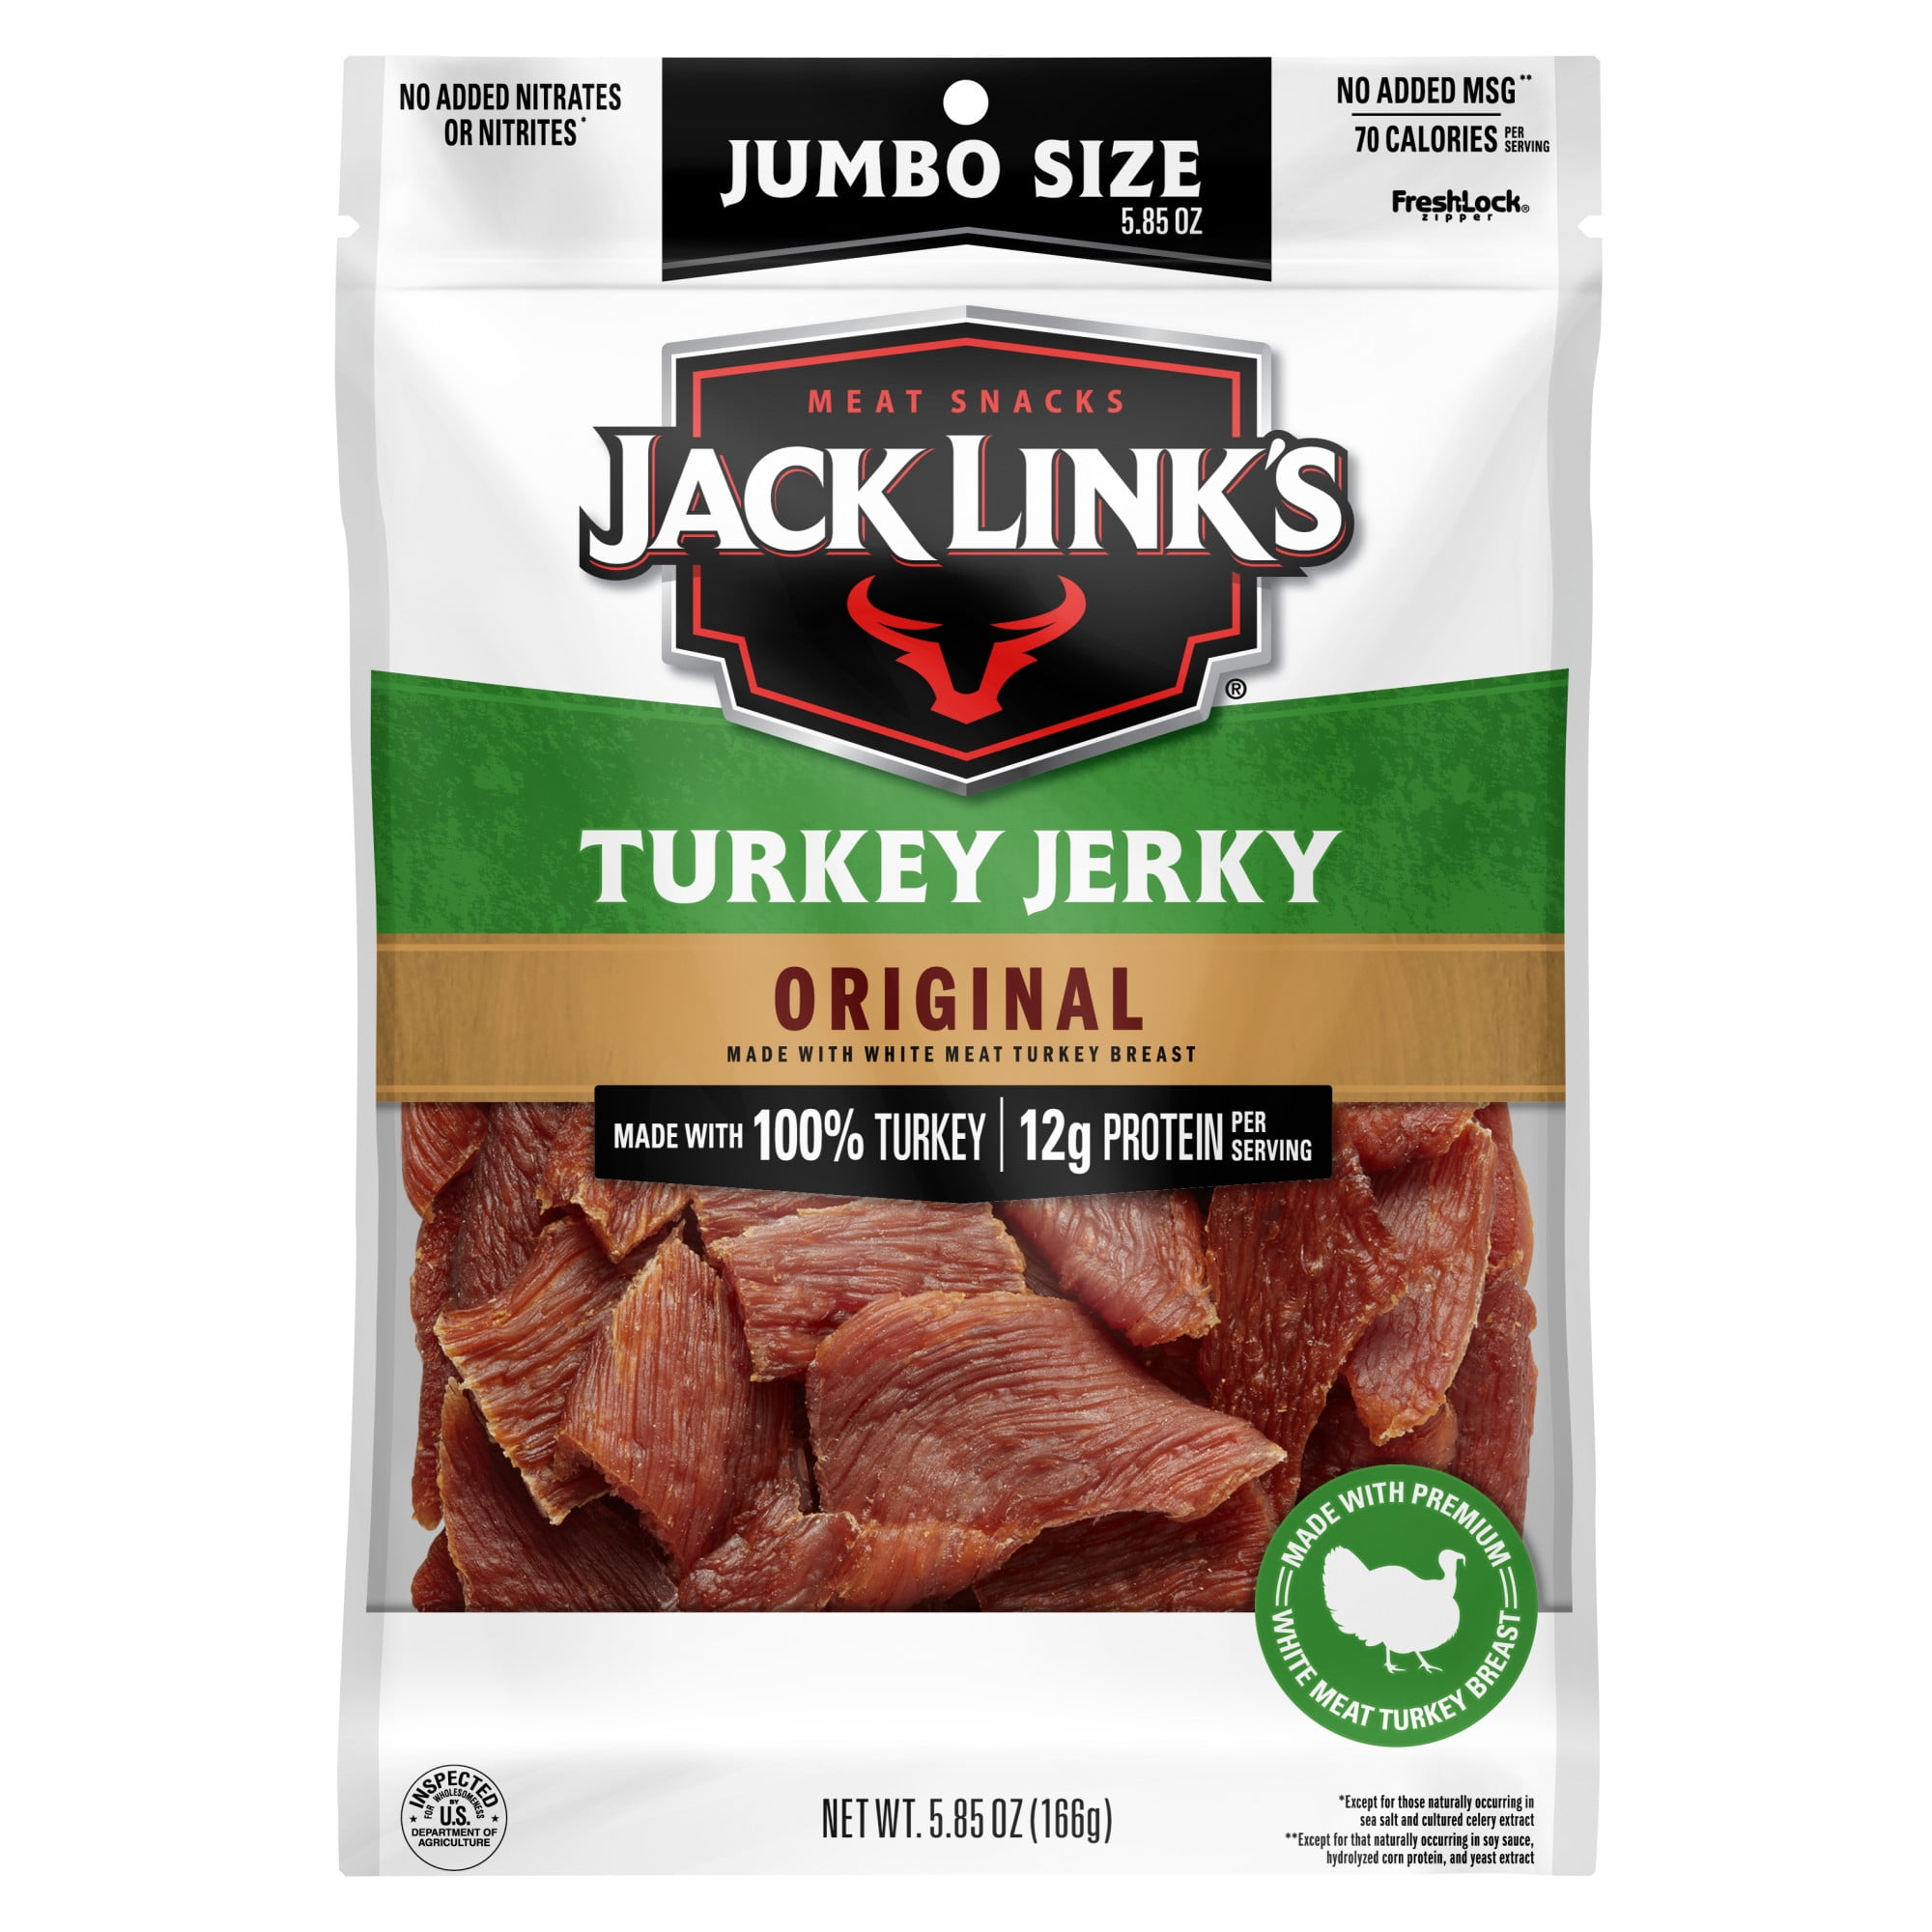 Original Family Size Turkey Jerky, 8 oz at Whole Foods Market